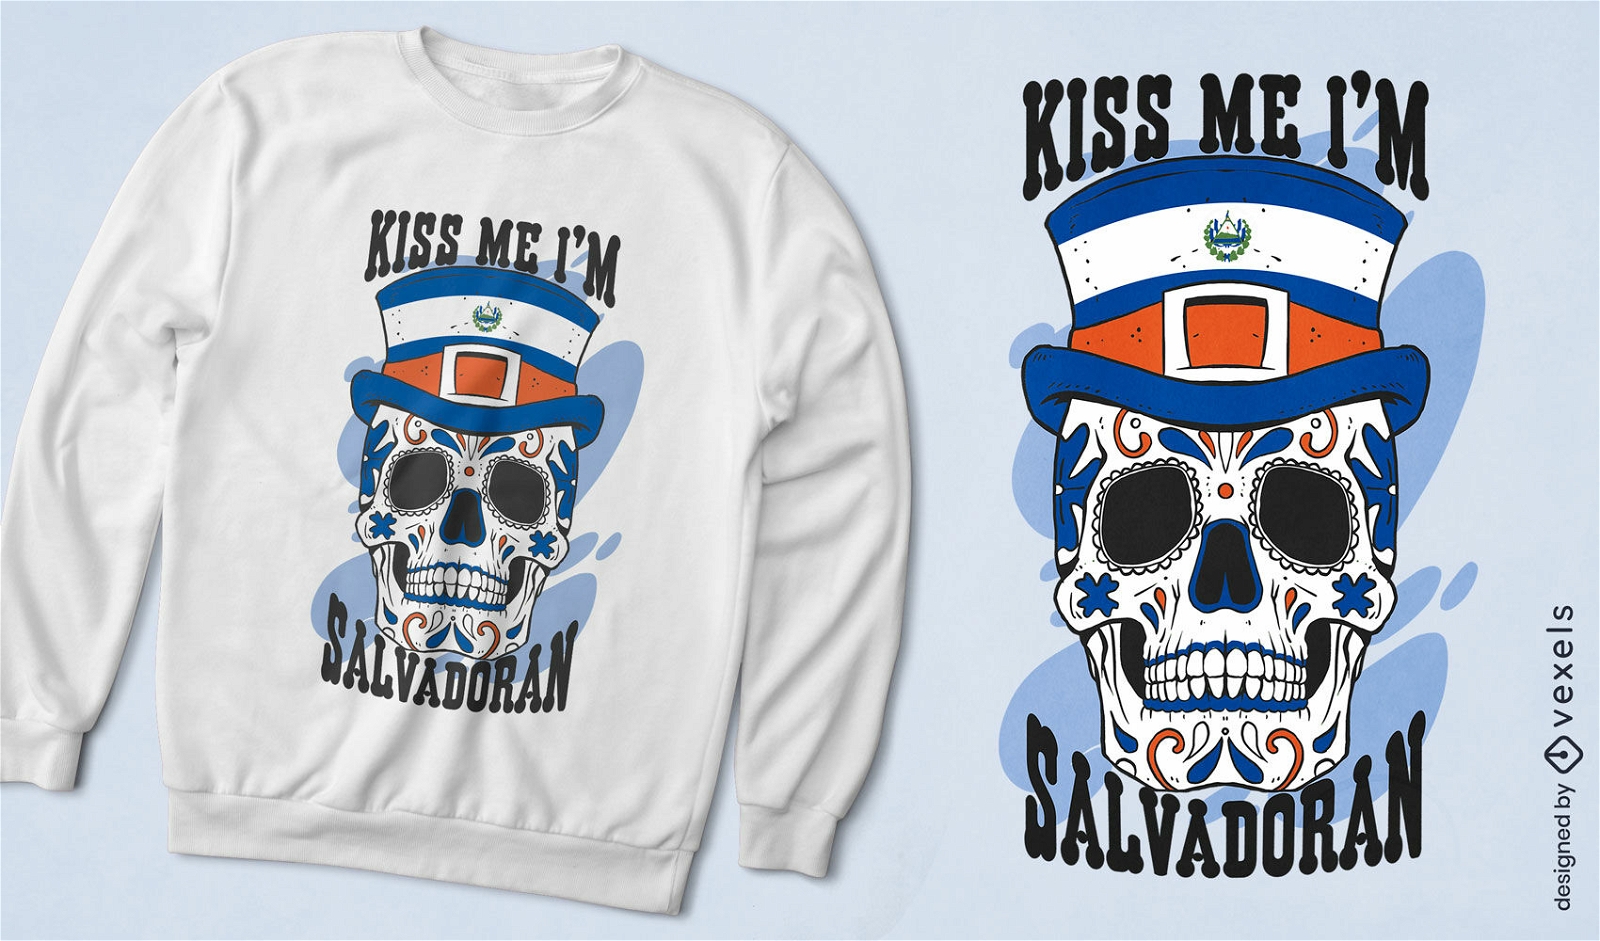 Salvadoran skull t-shirt design